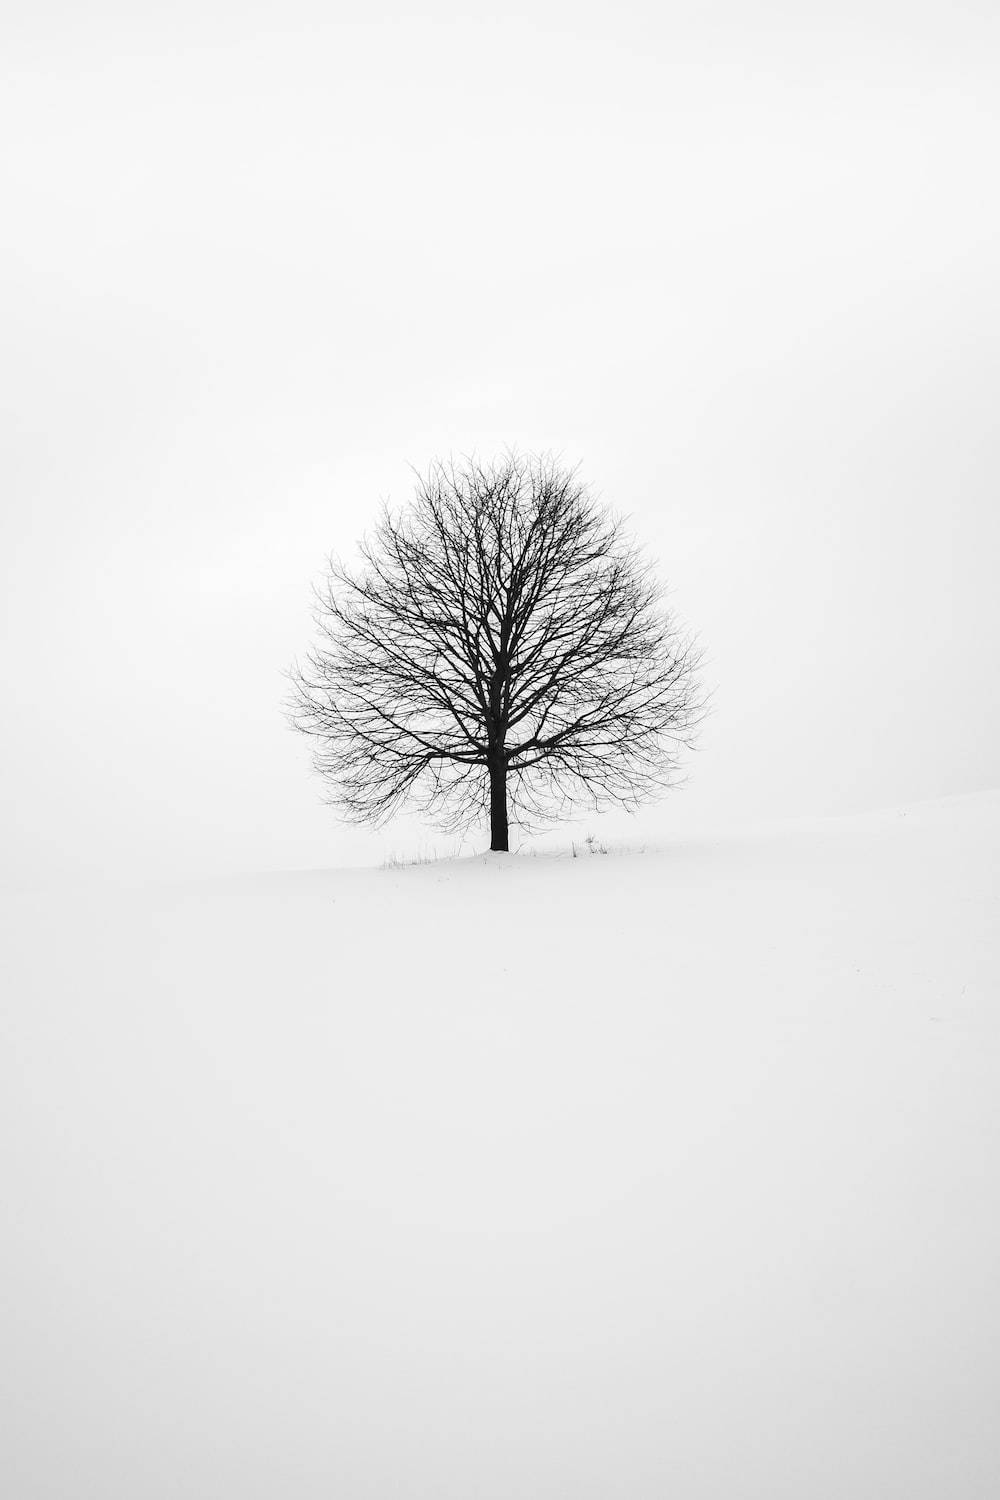 Small Black Tree On Plain White